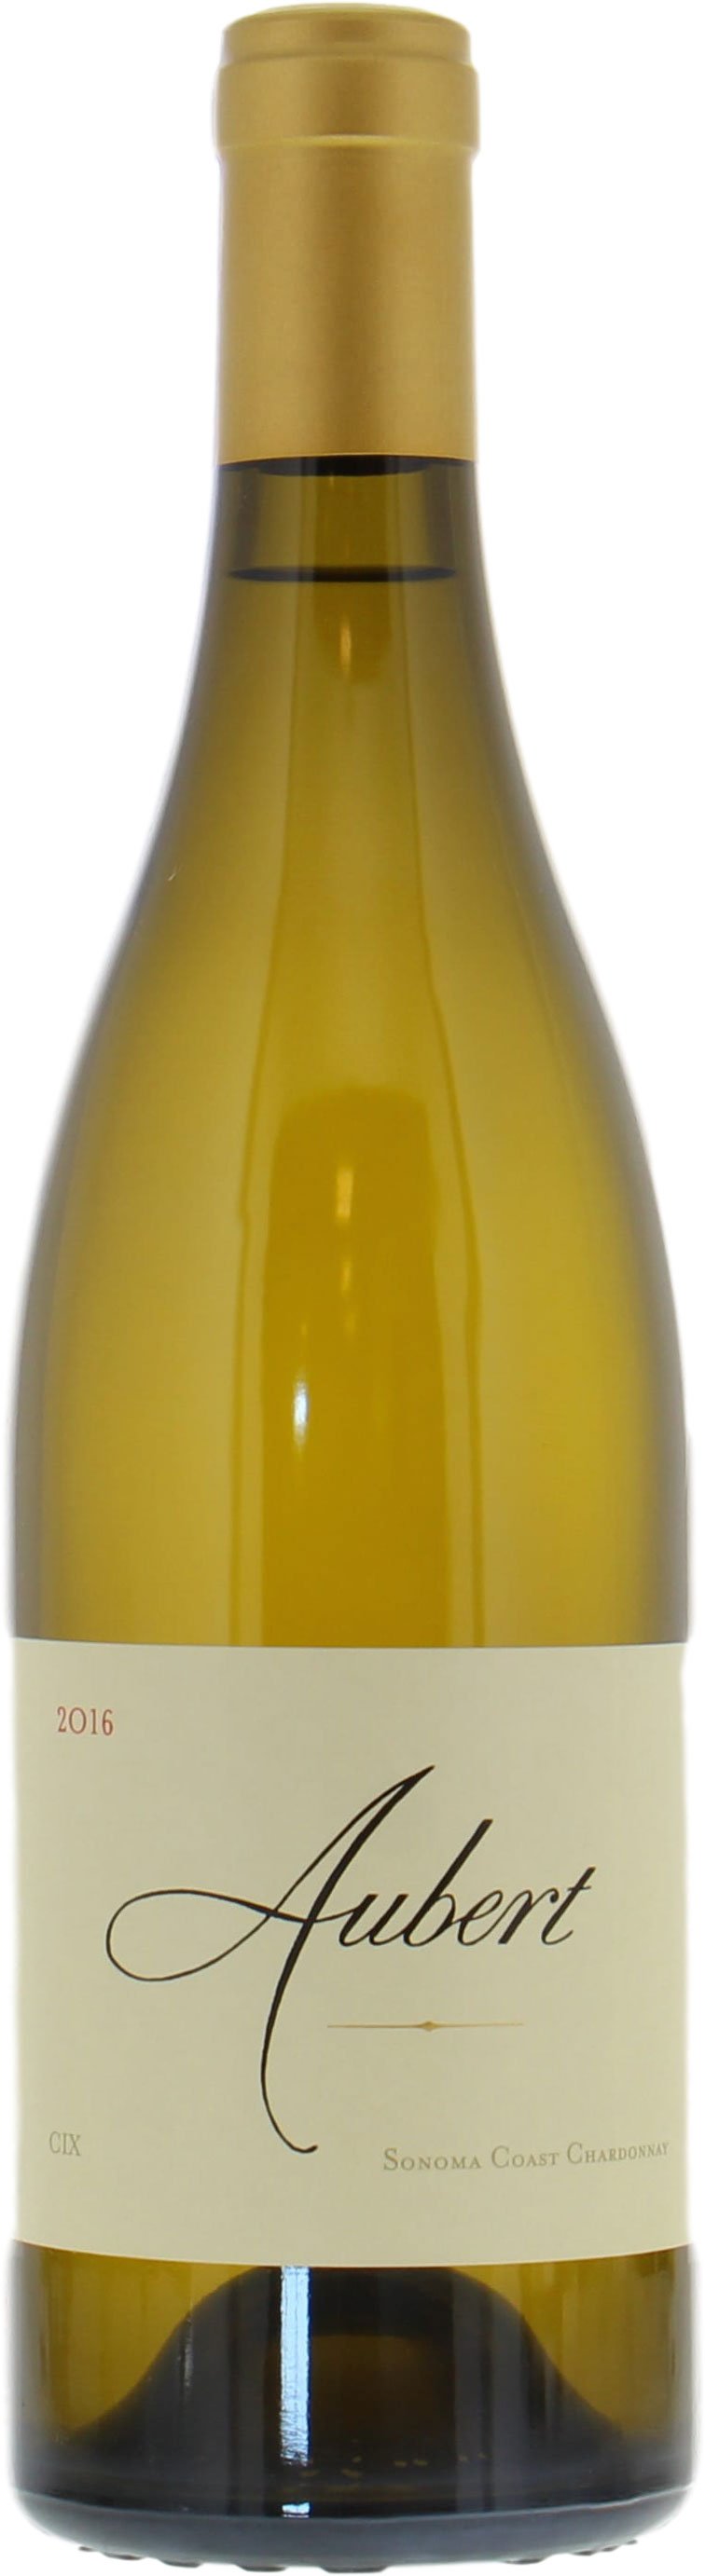 Aubert - CIX Chardonnay 2016 Perfect